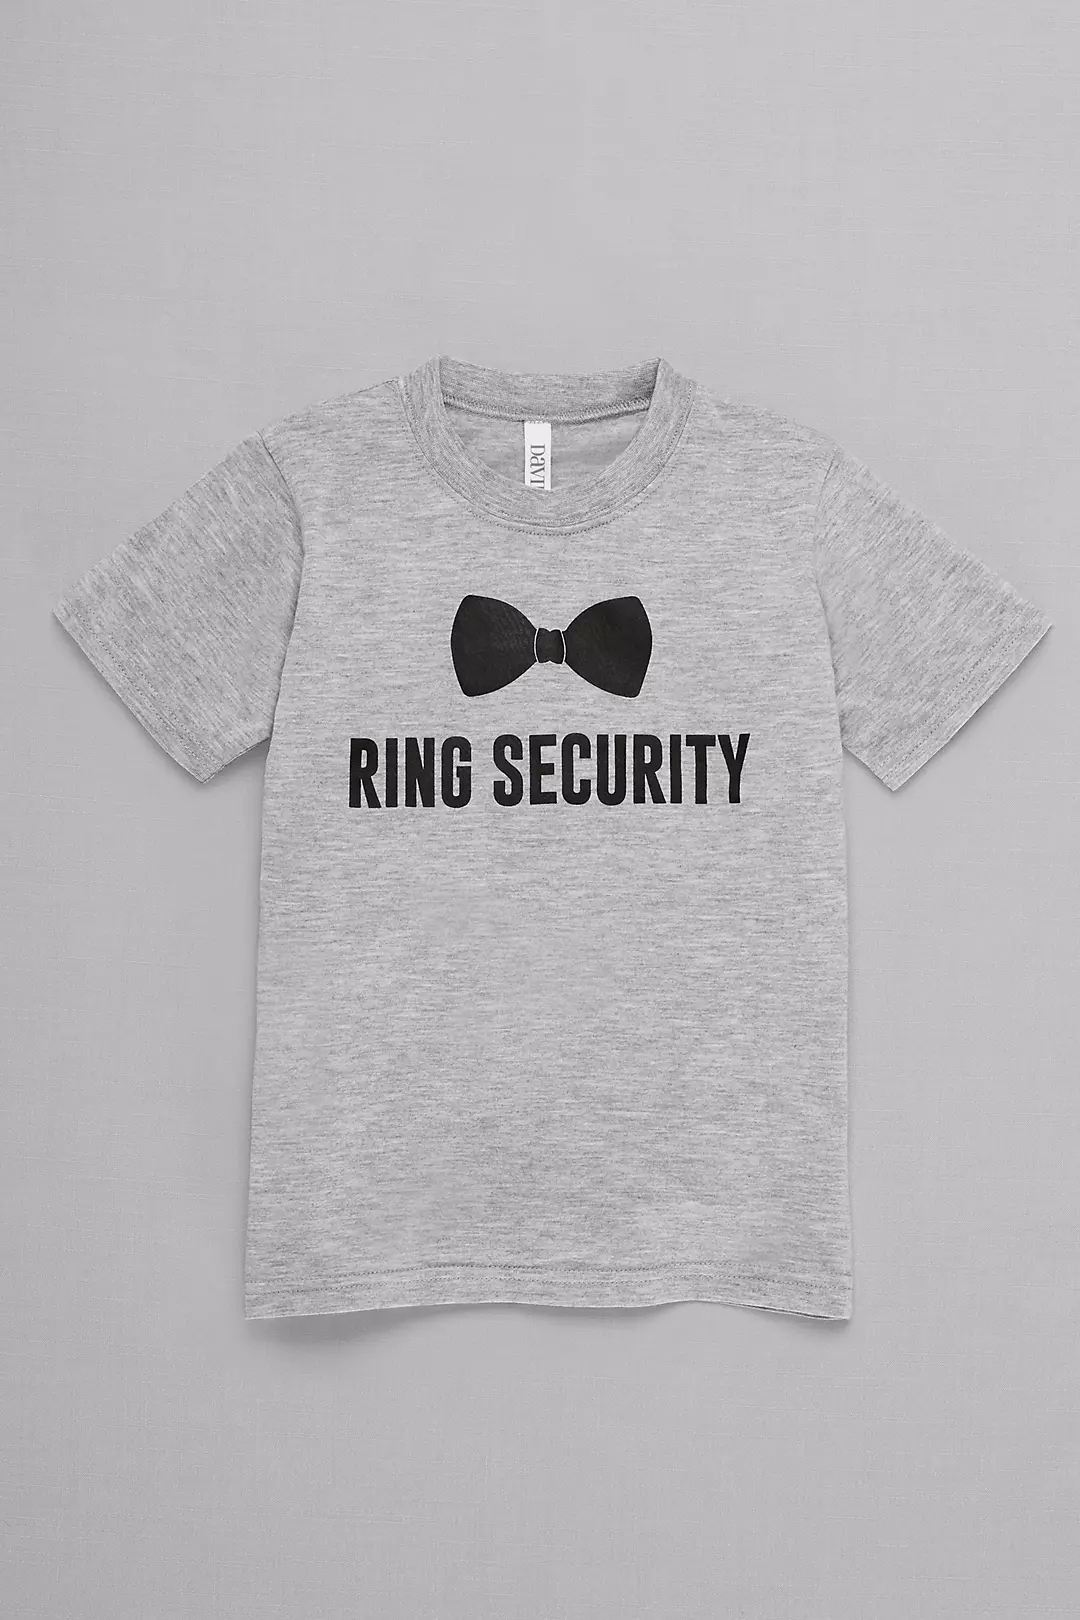 Ring Security Kids Tee Image